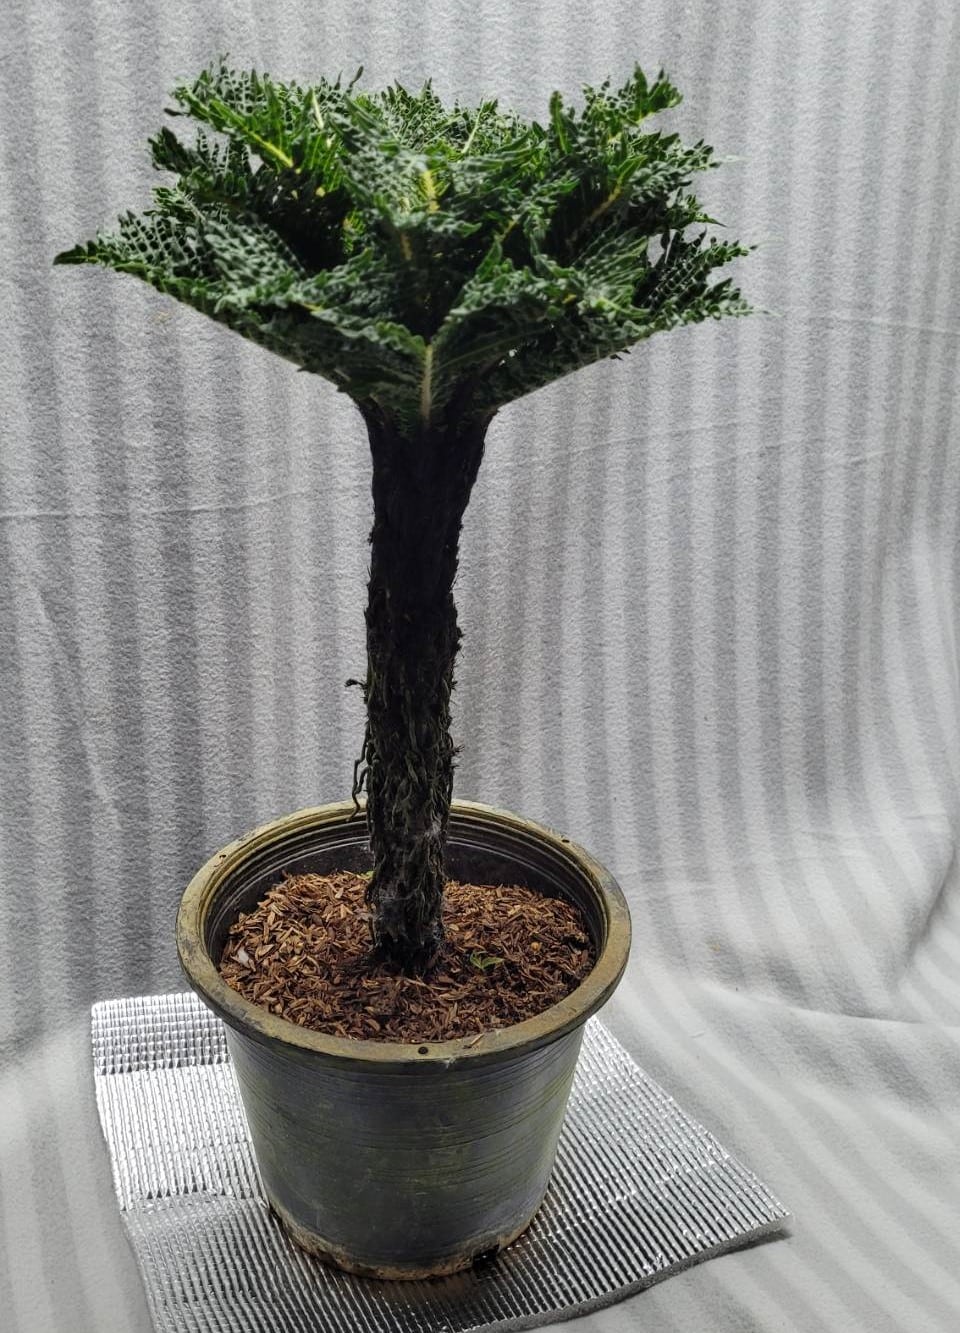 Blechnum gibbum Dwarf fern tree